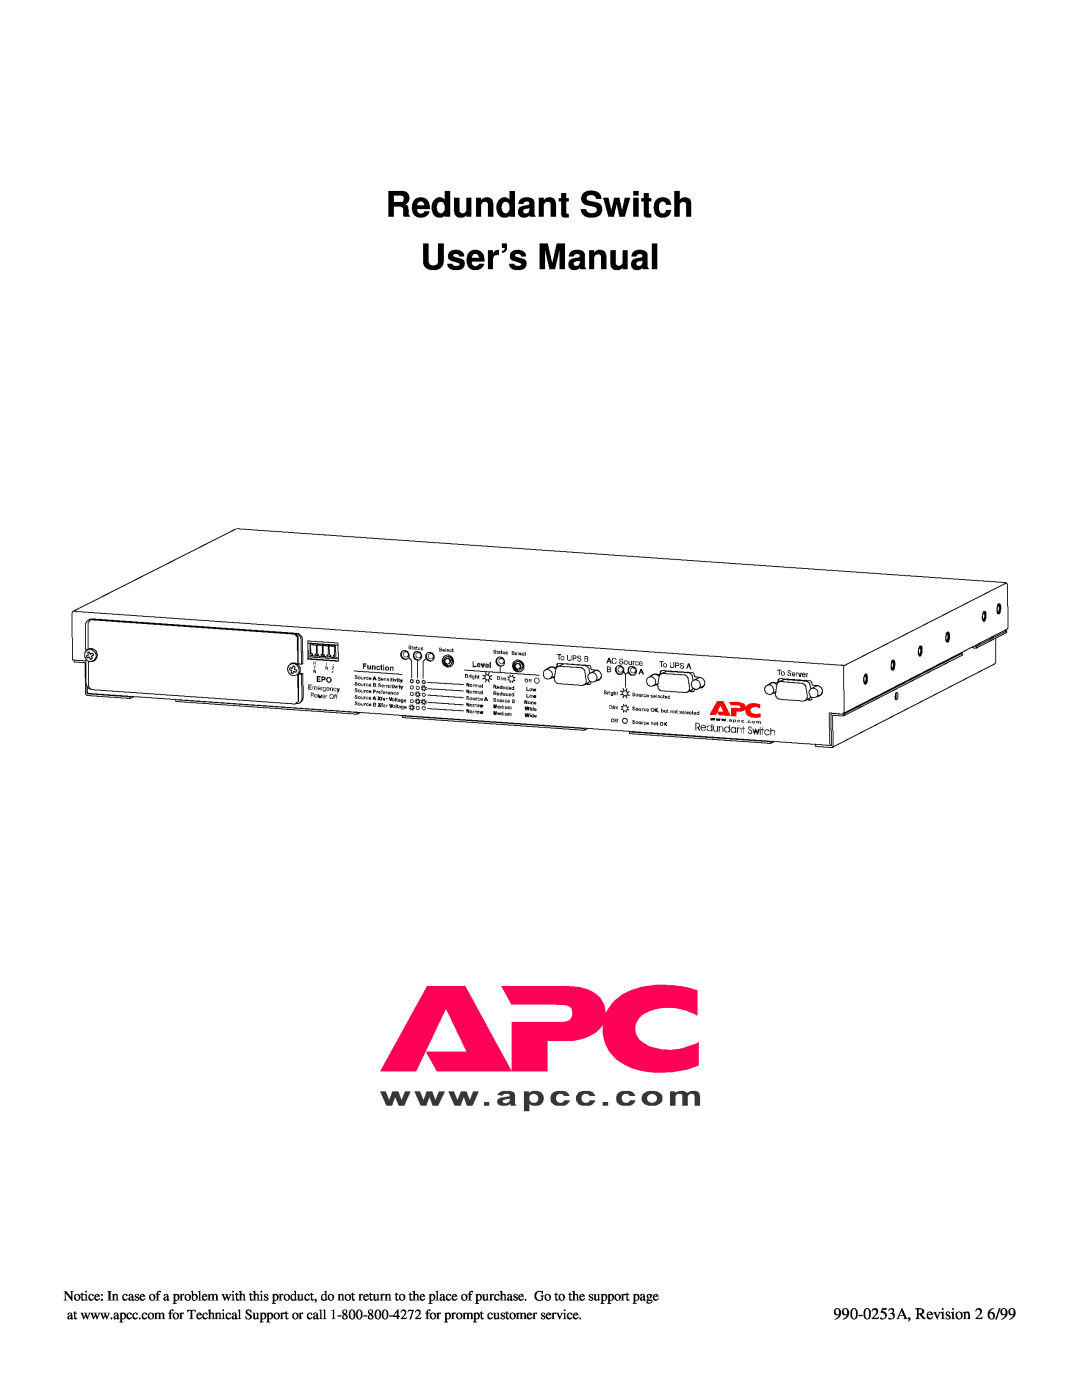 APC SU041 1400 VA, SU043 1400 VA, SU42-2 3000 VA user manual Redundant Switch, User’s Manual, 990-0253A, Revision 2 6/99 